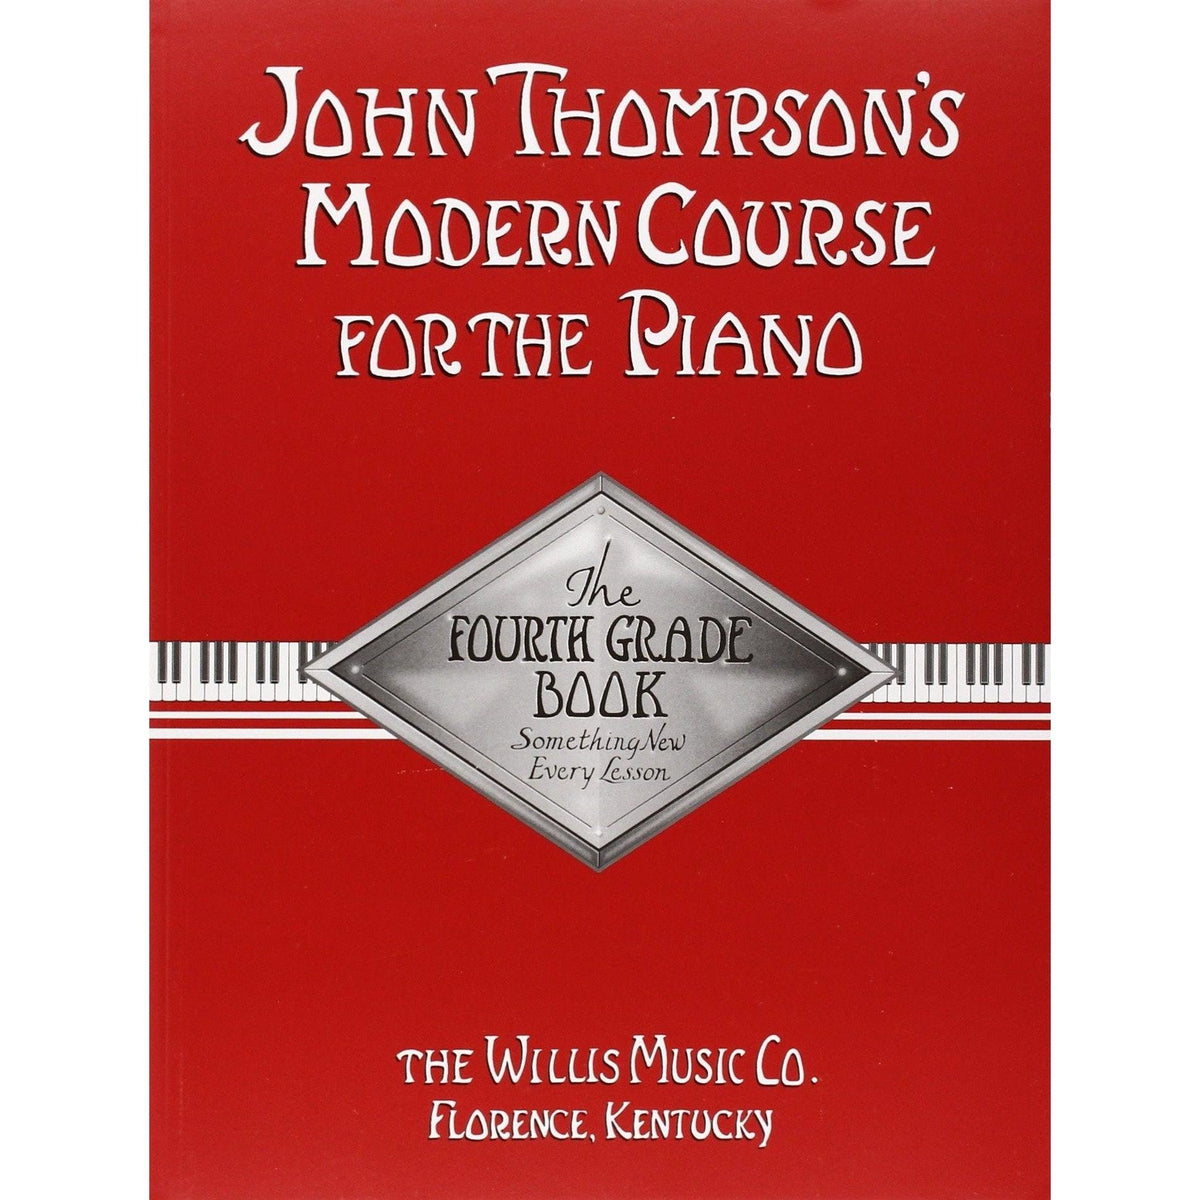 John Thompson Modern Course For The Piano - 4th Grade Book